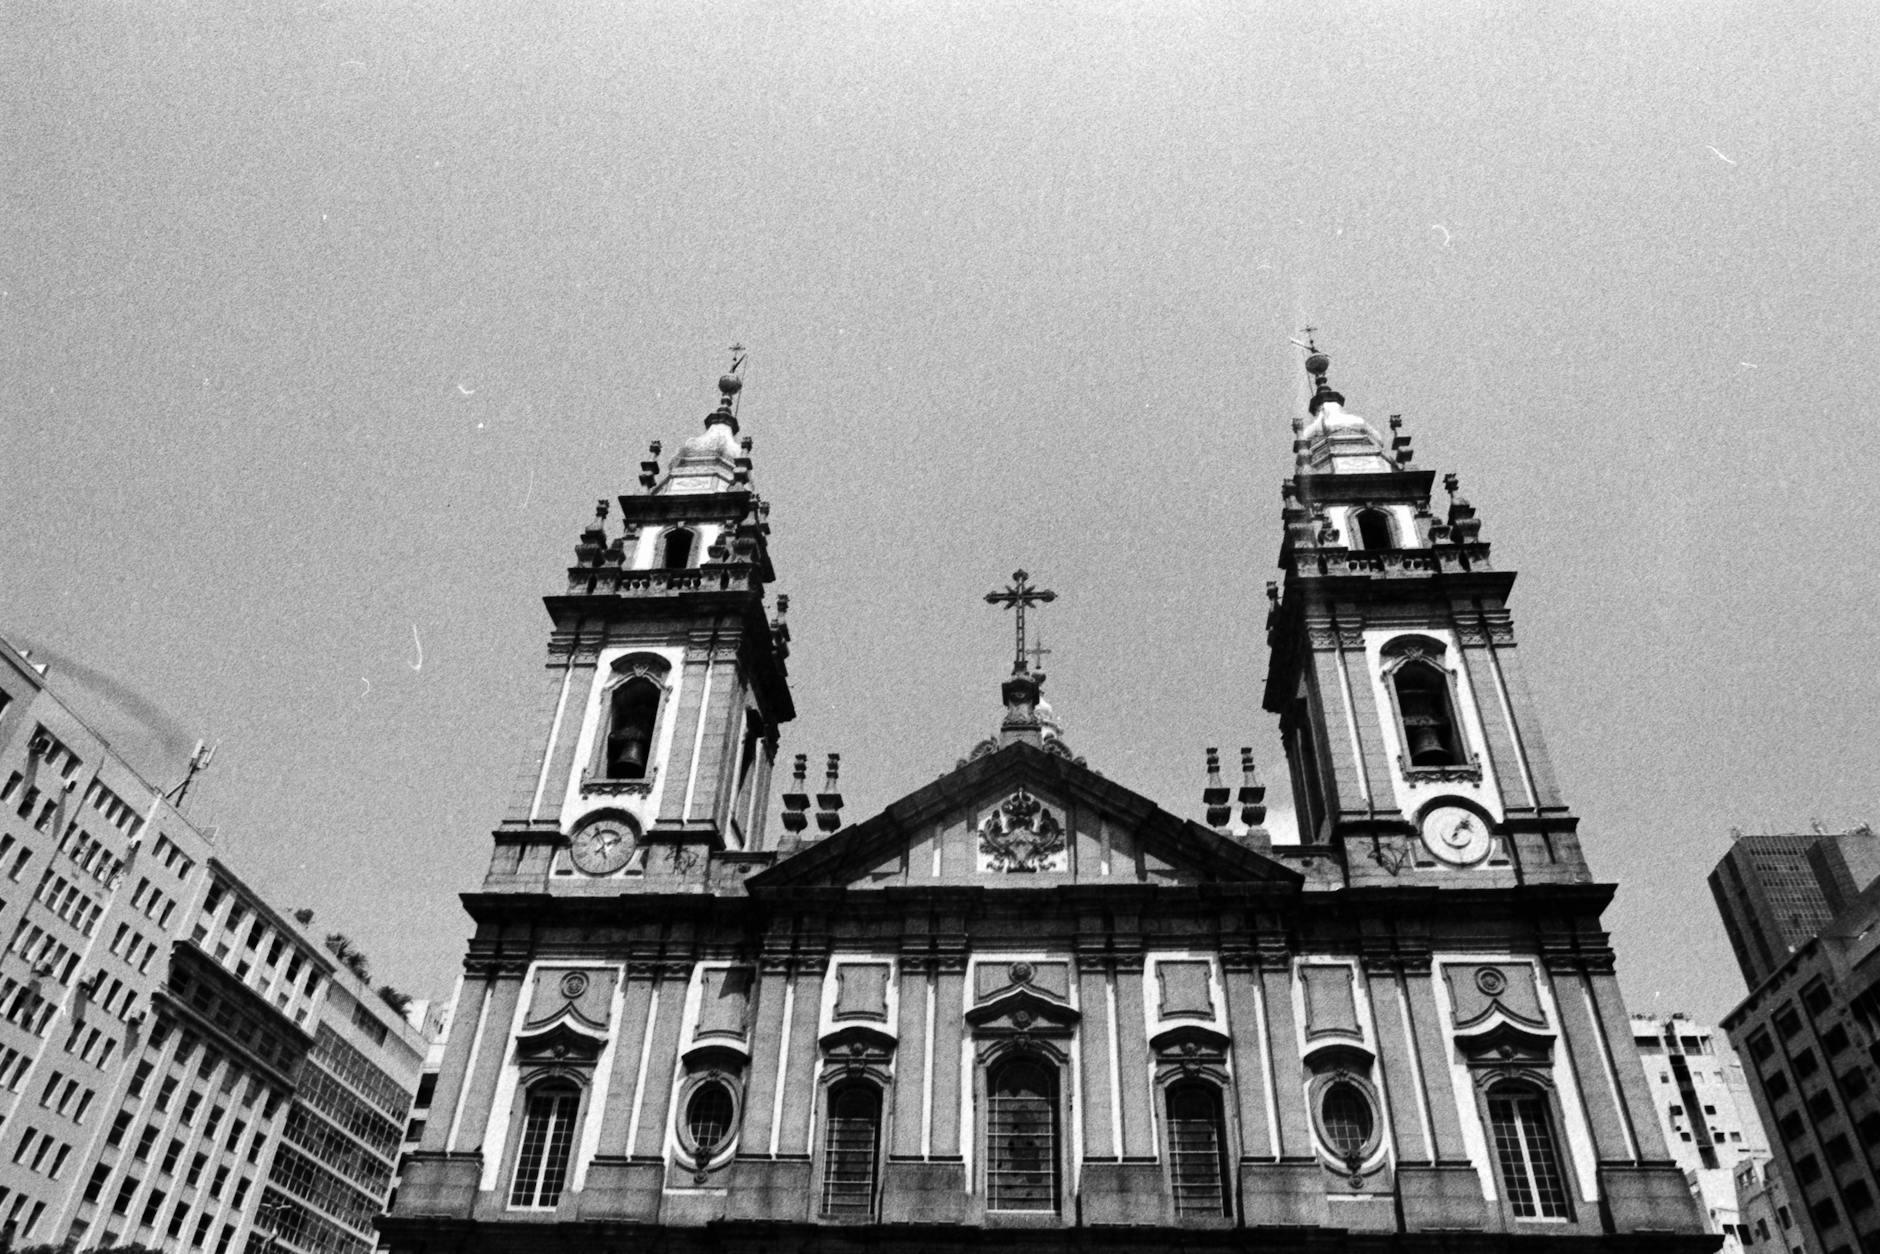 Facade of Catholic church in city